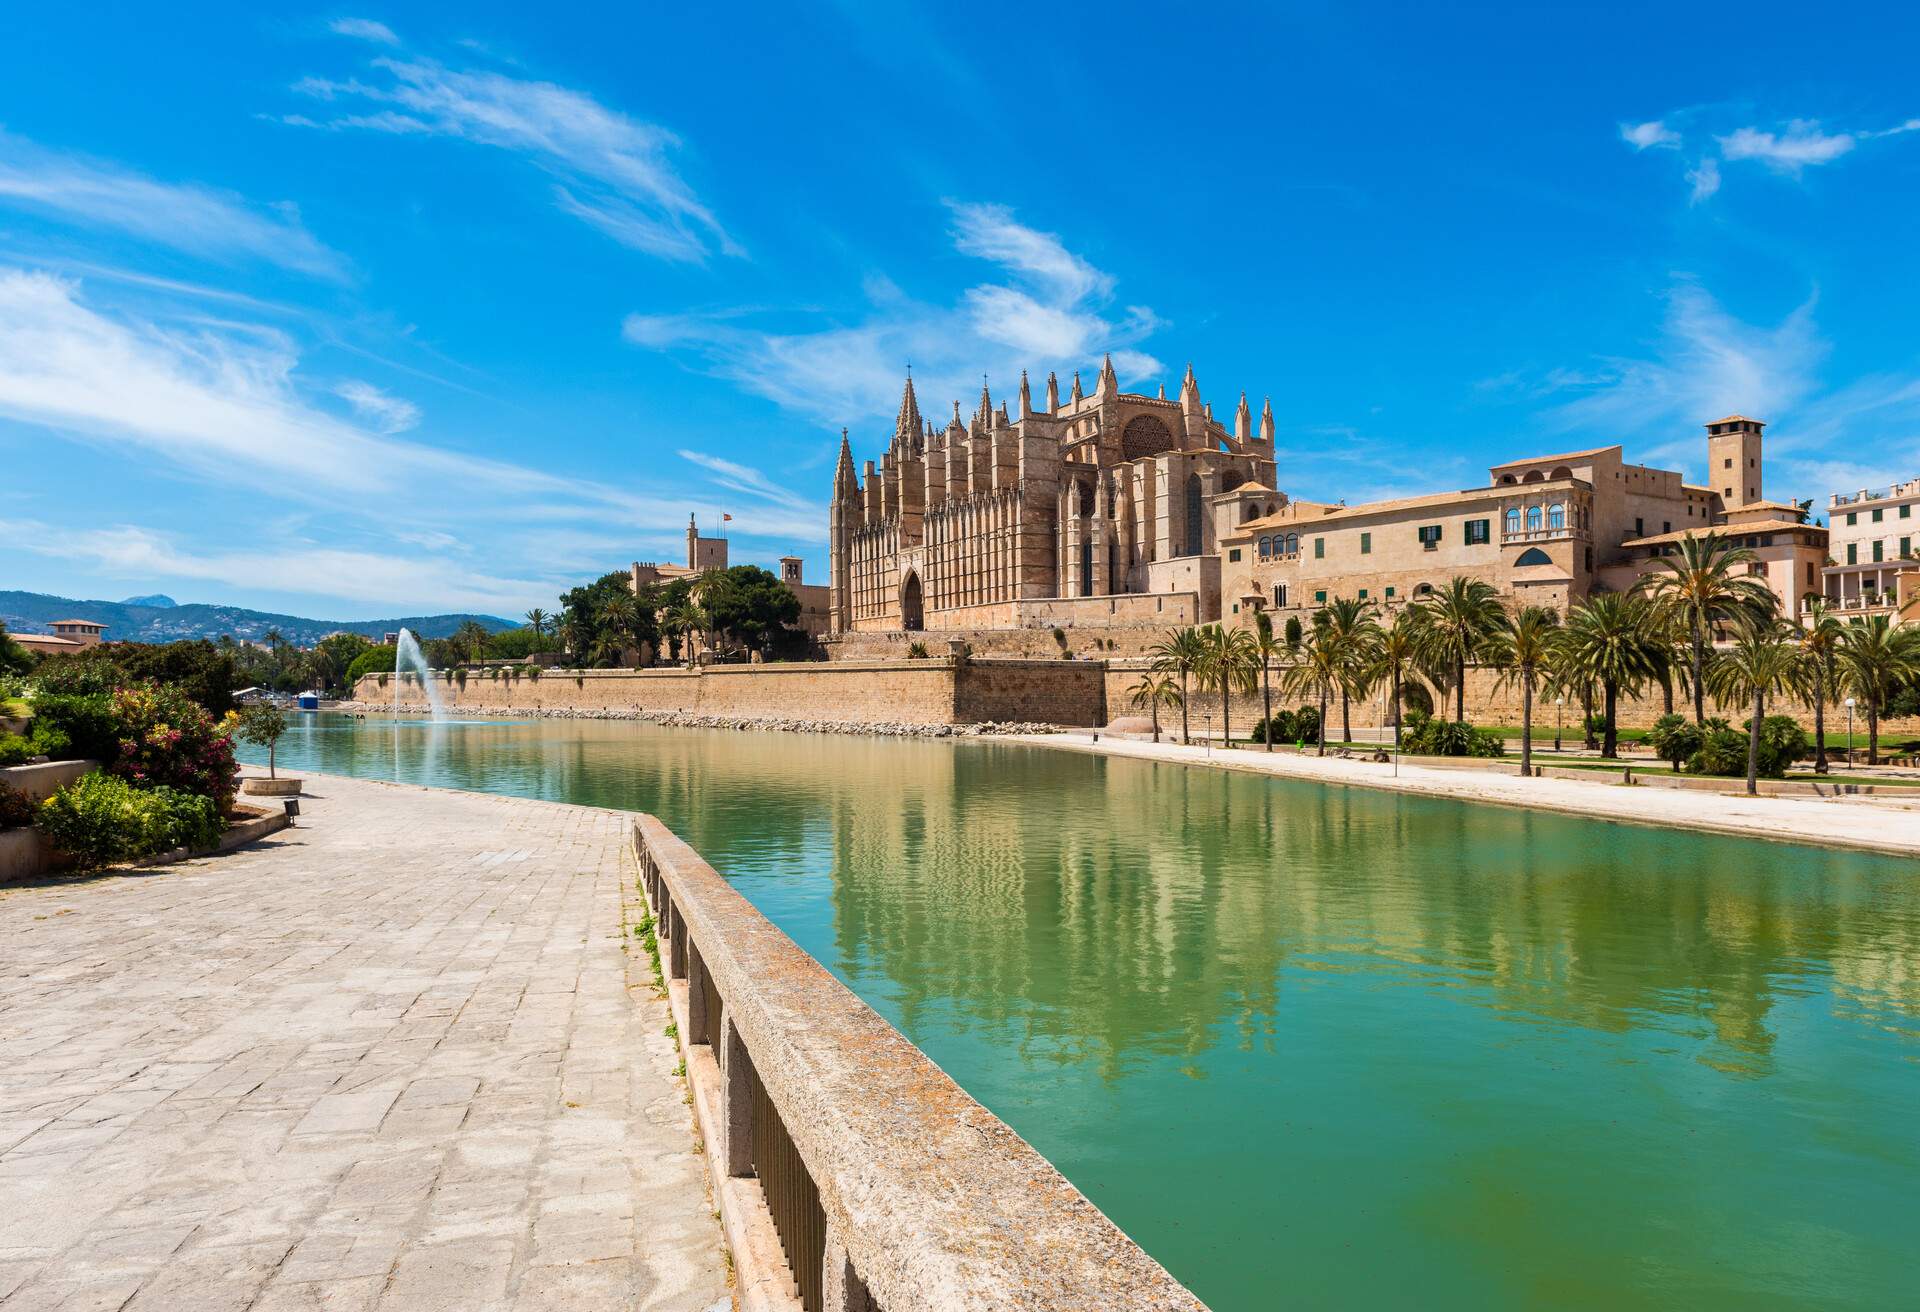 Cathedral of Palma de Mallorca, Mallorca, Balearic Islands, Spain